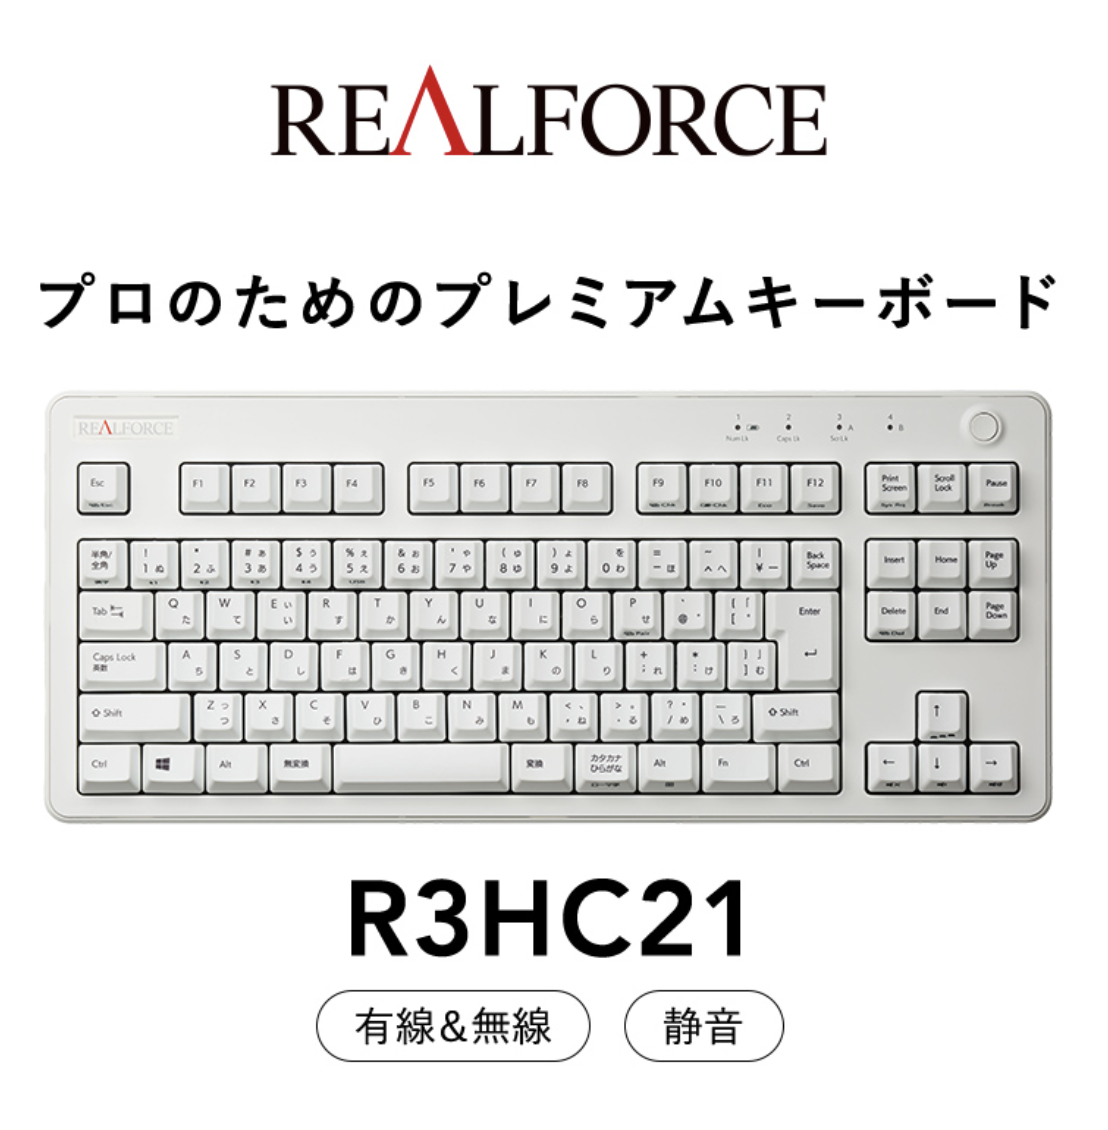 REALFORCE R3HC21 スーパーホワイト 日本語配列 昇華印刷 キー荷重ALL45g